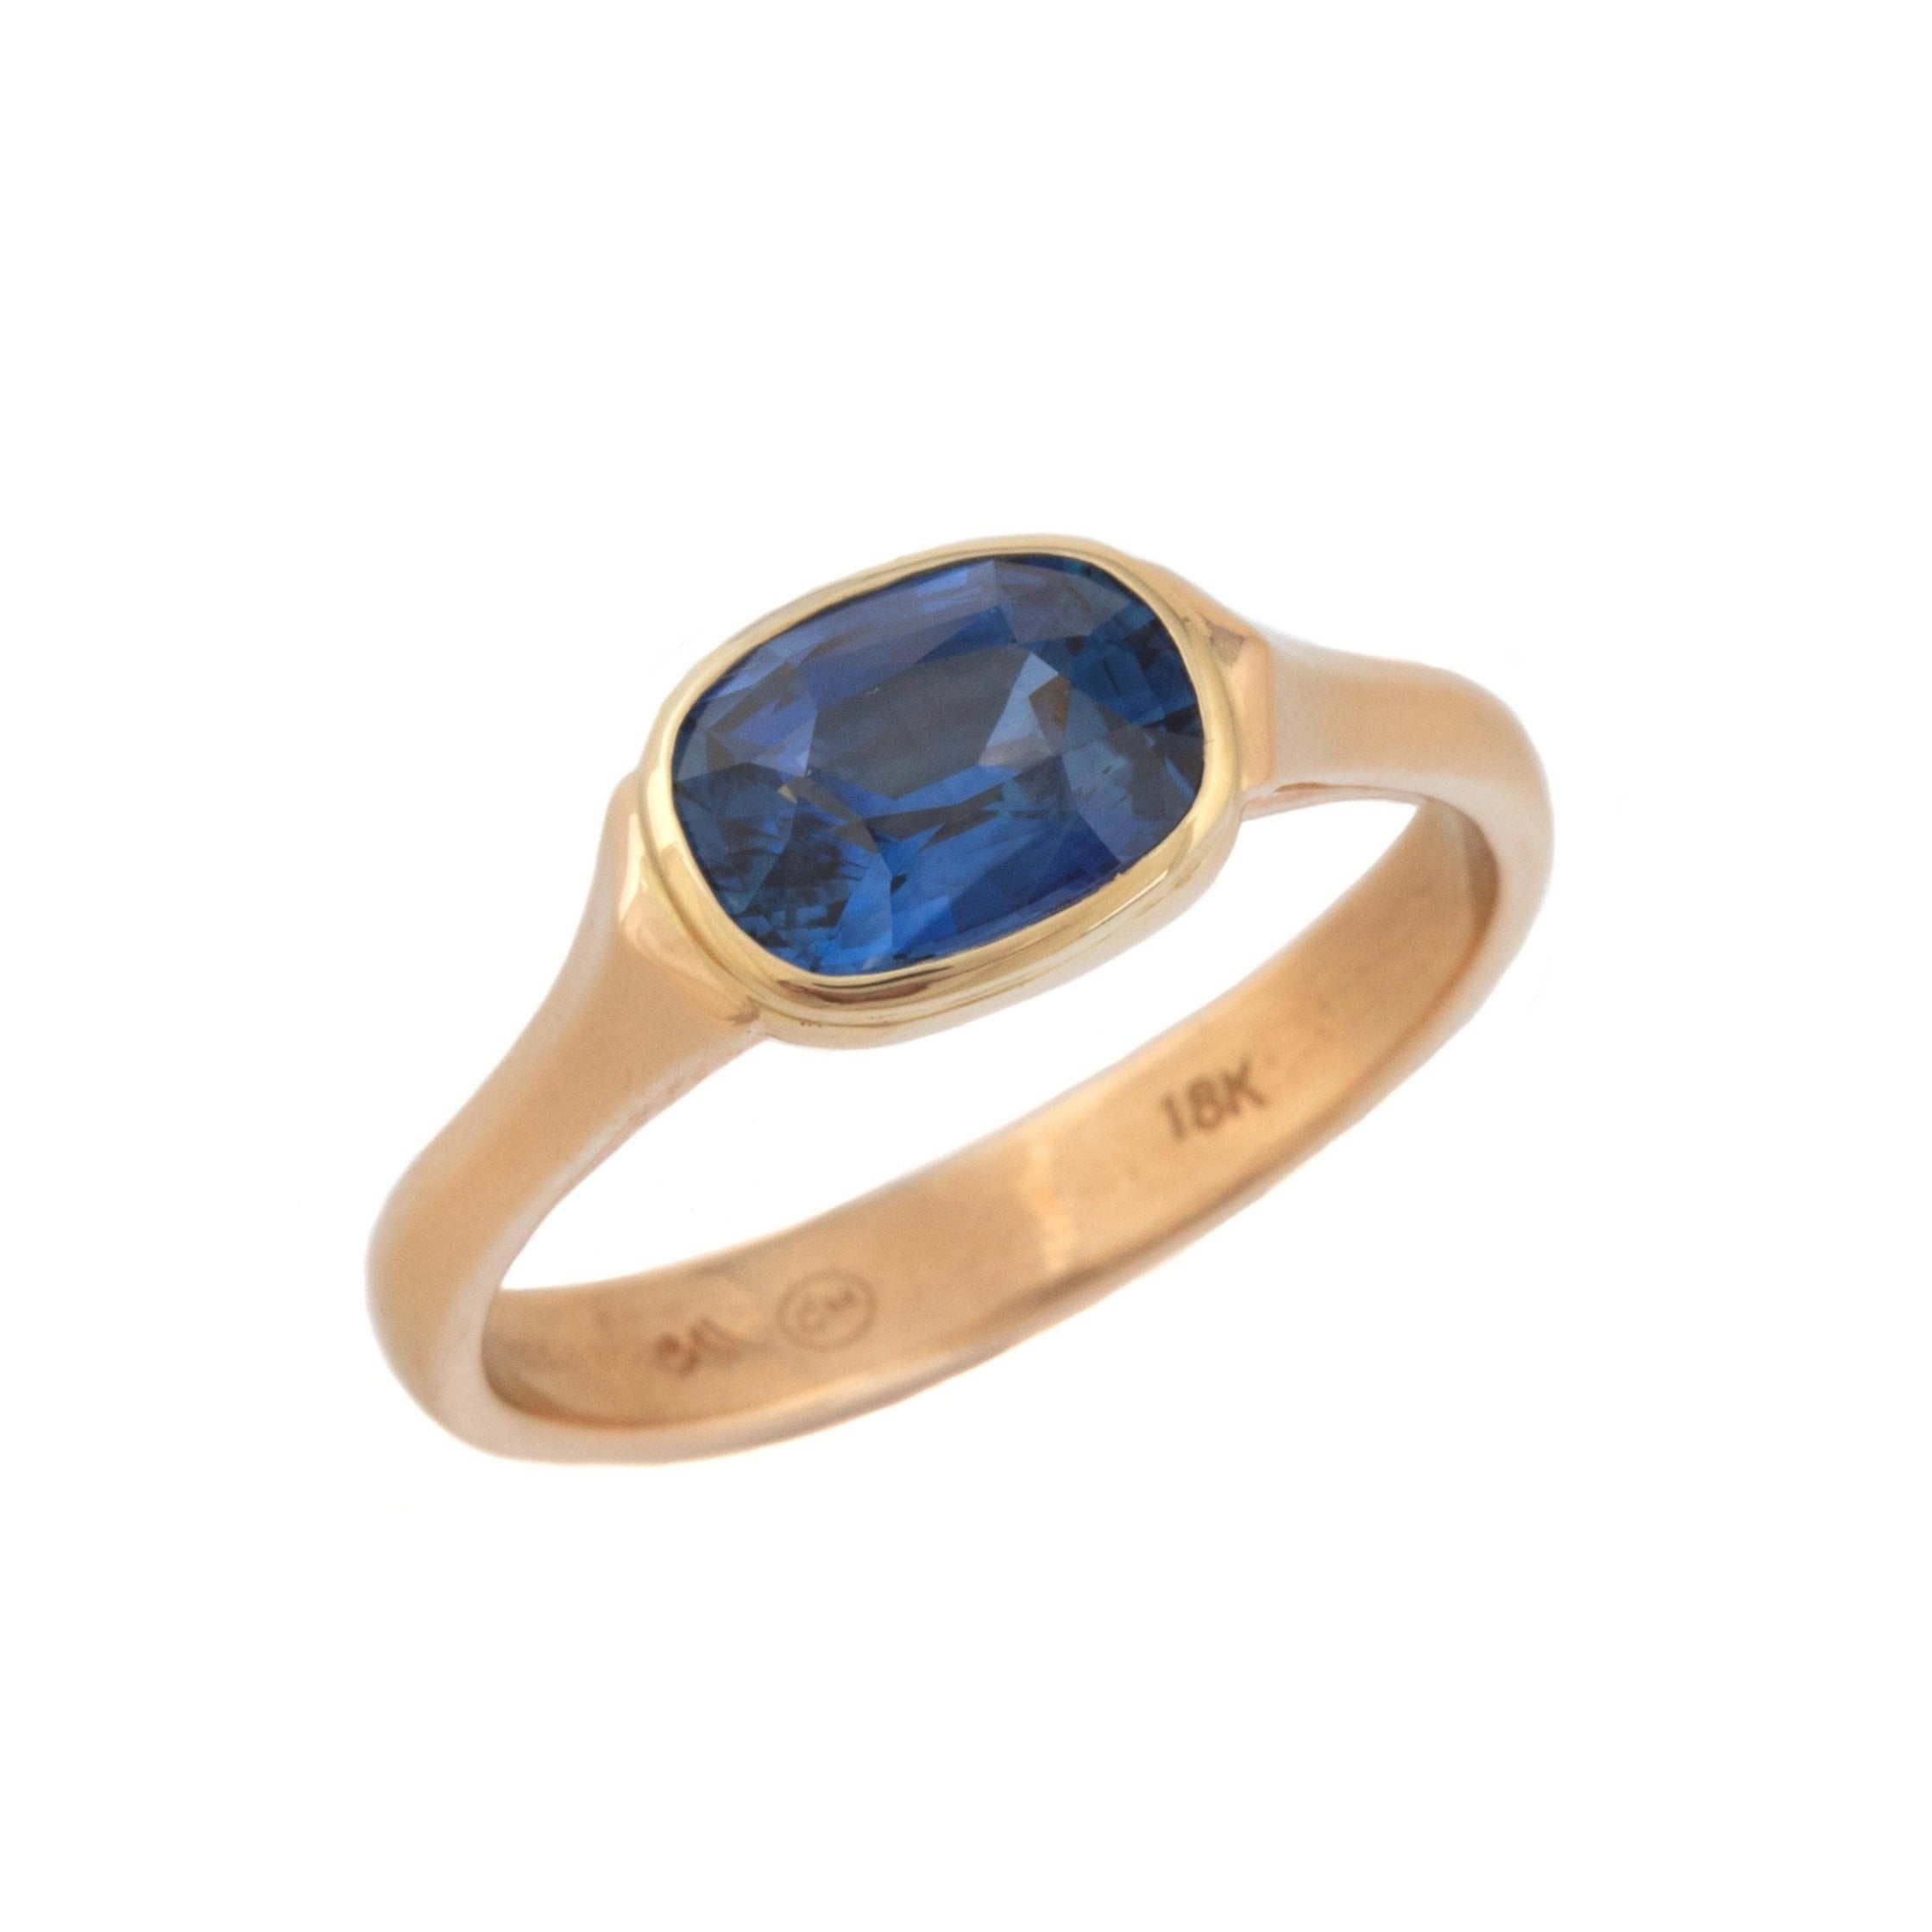 Lunette Style Blue Sapphire Ring – Caleb Meyer Studio